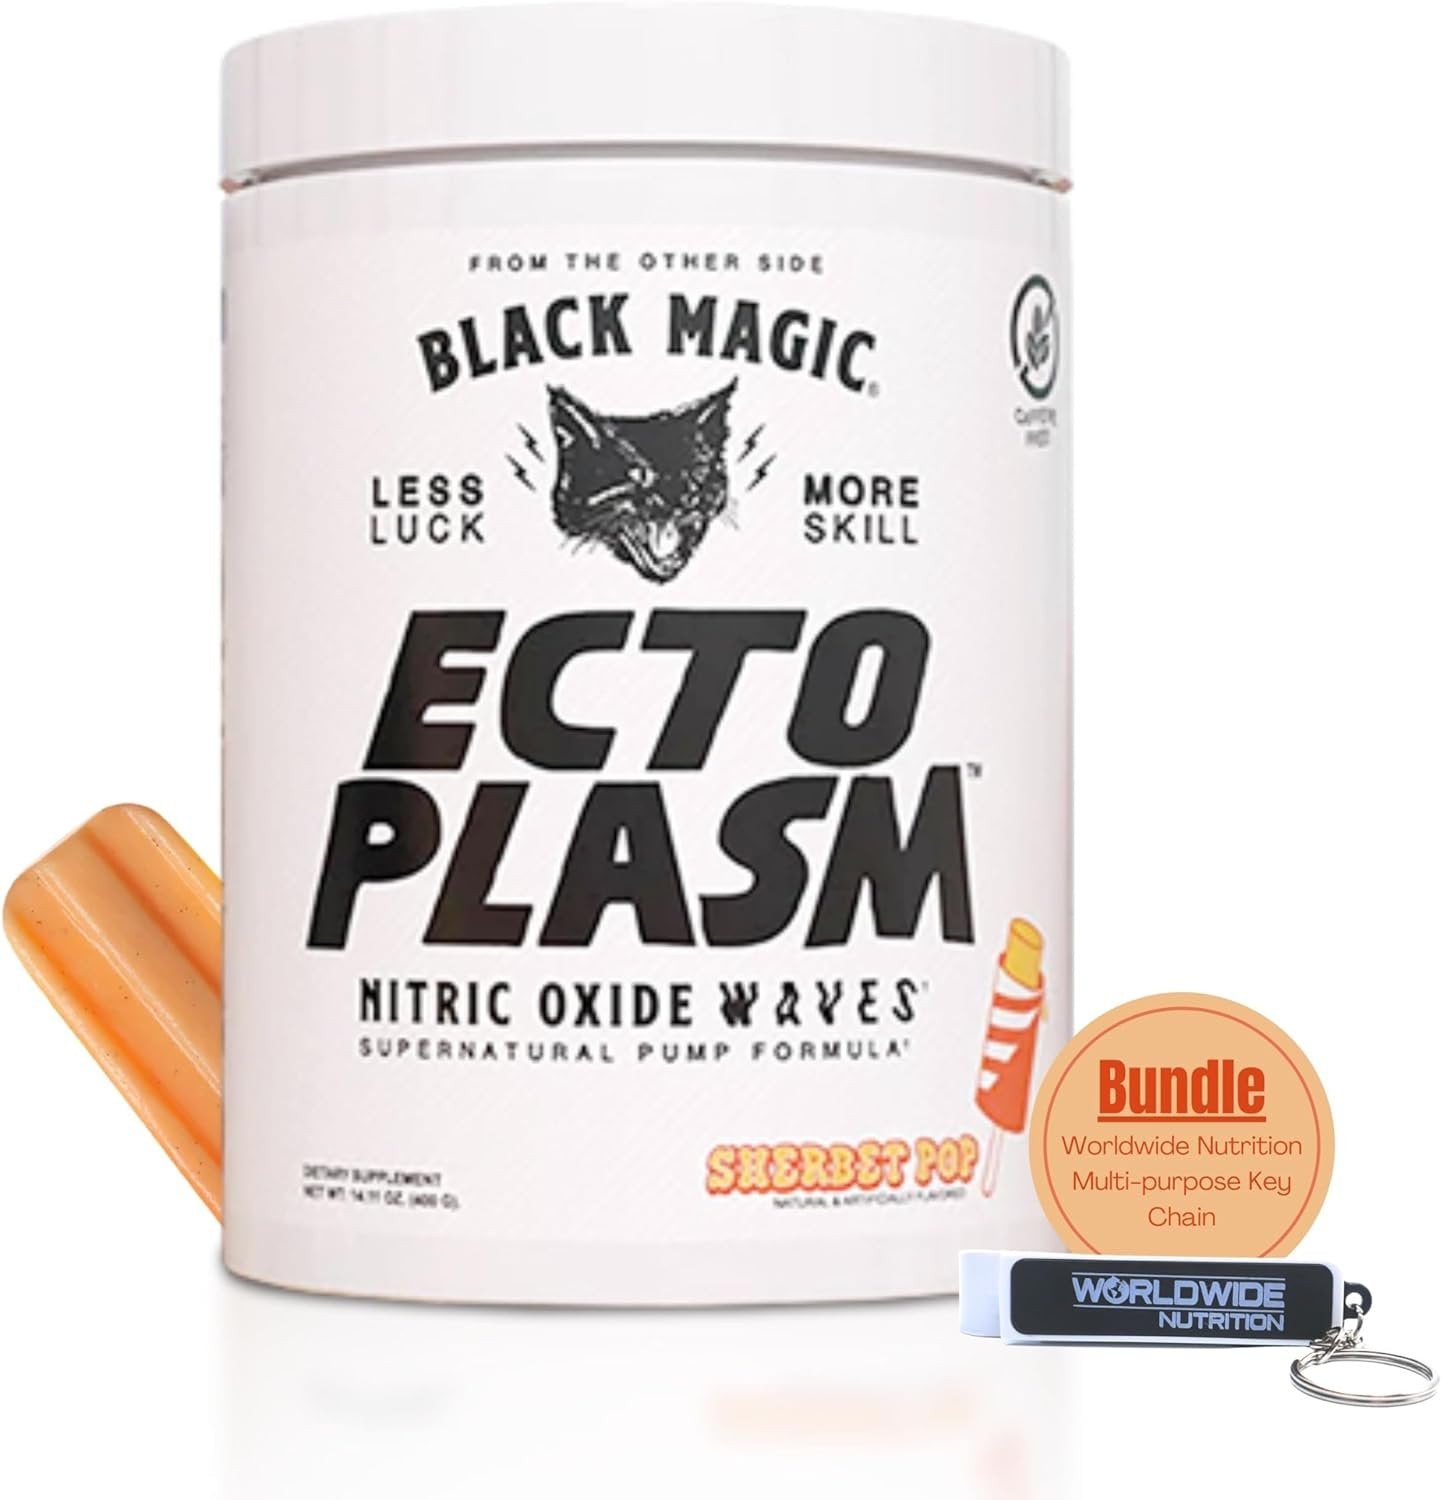 Black Magic Supply Ecto Plasm Nitric Oxide Waves - Supernatural Pump Formula - Sherbet Pop - 400g - with Multipurpose Key Chain